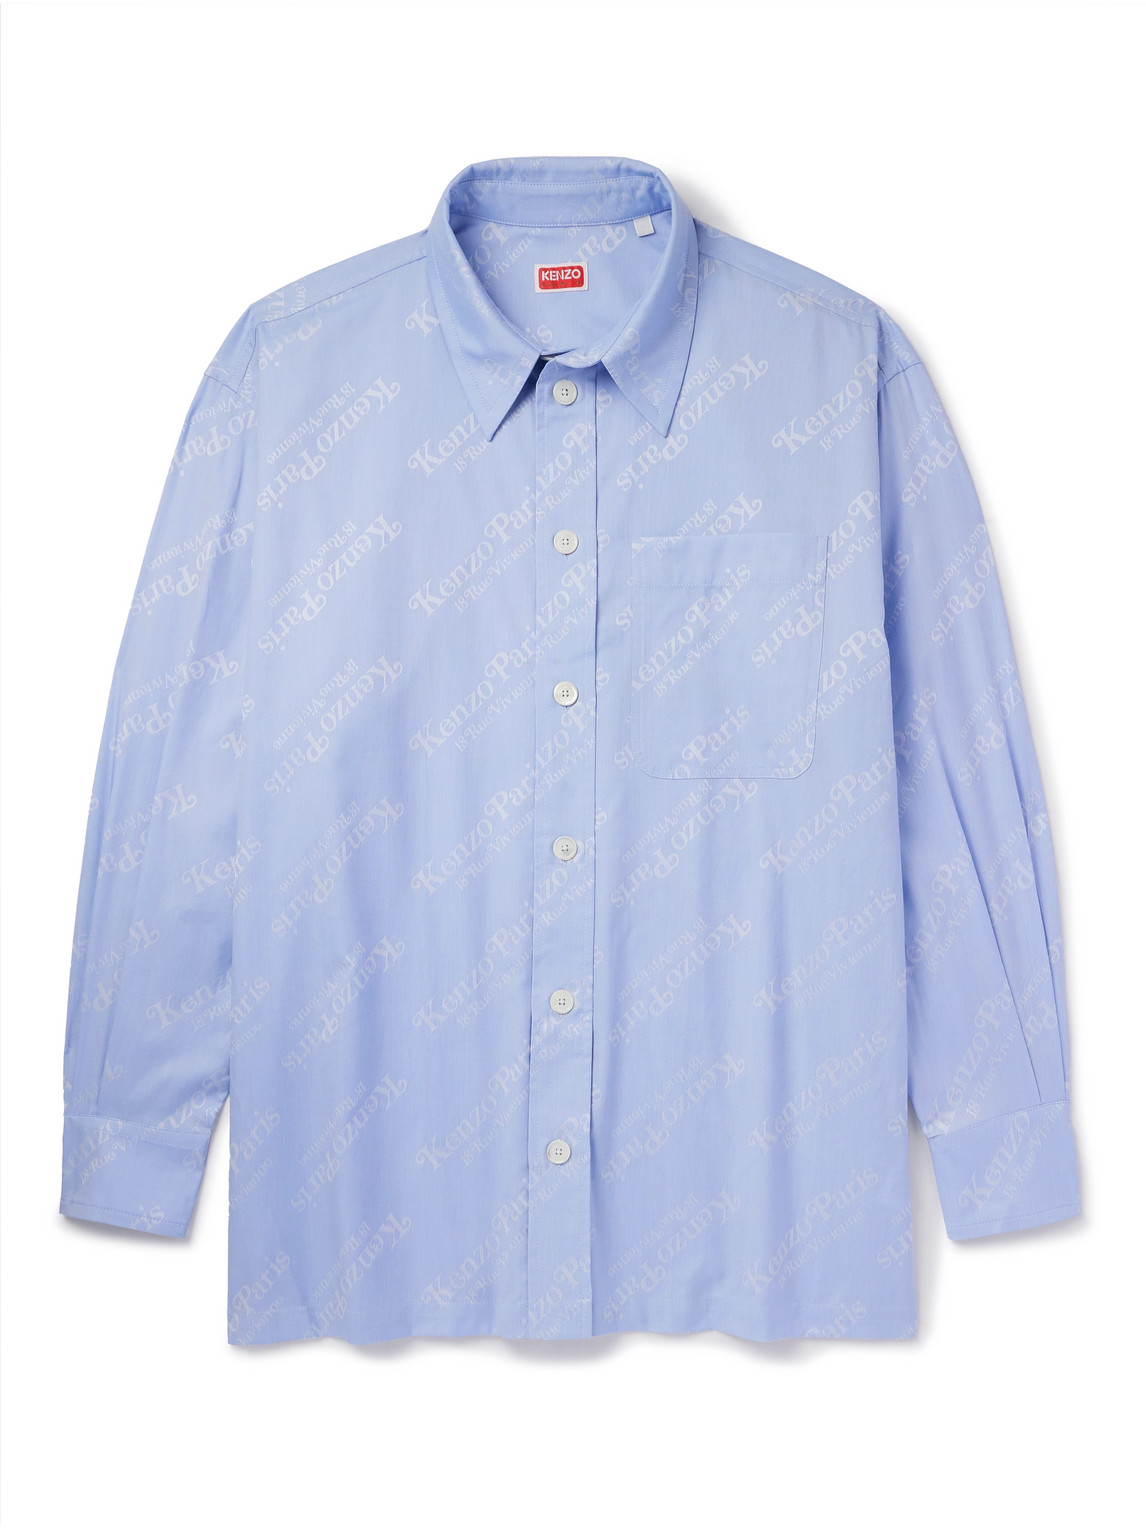 KENZO - VERDY Oversized Logo-Jacquard Cotton Shirt - Men - Blue - L von KENZO